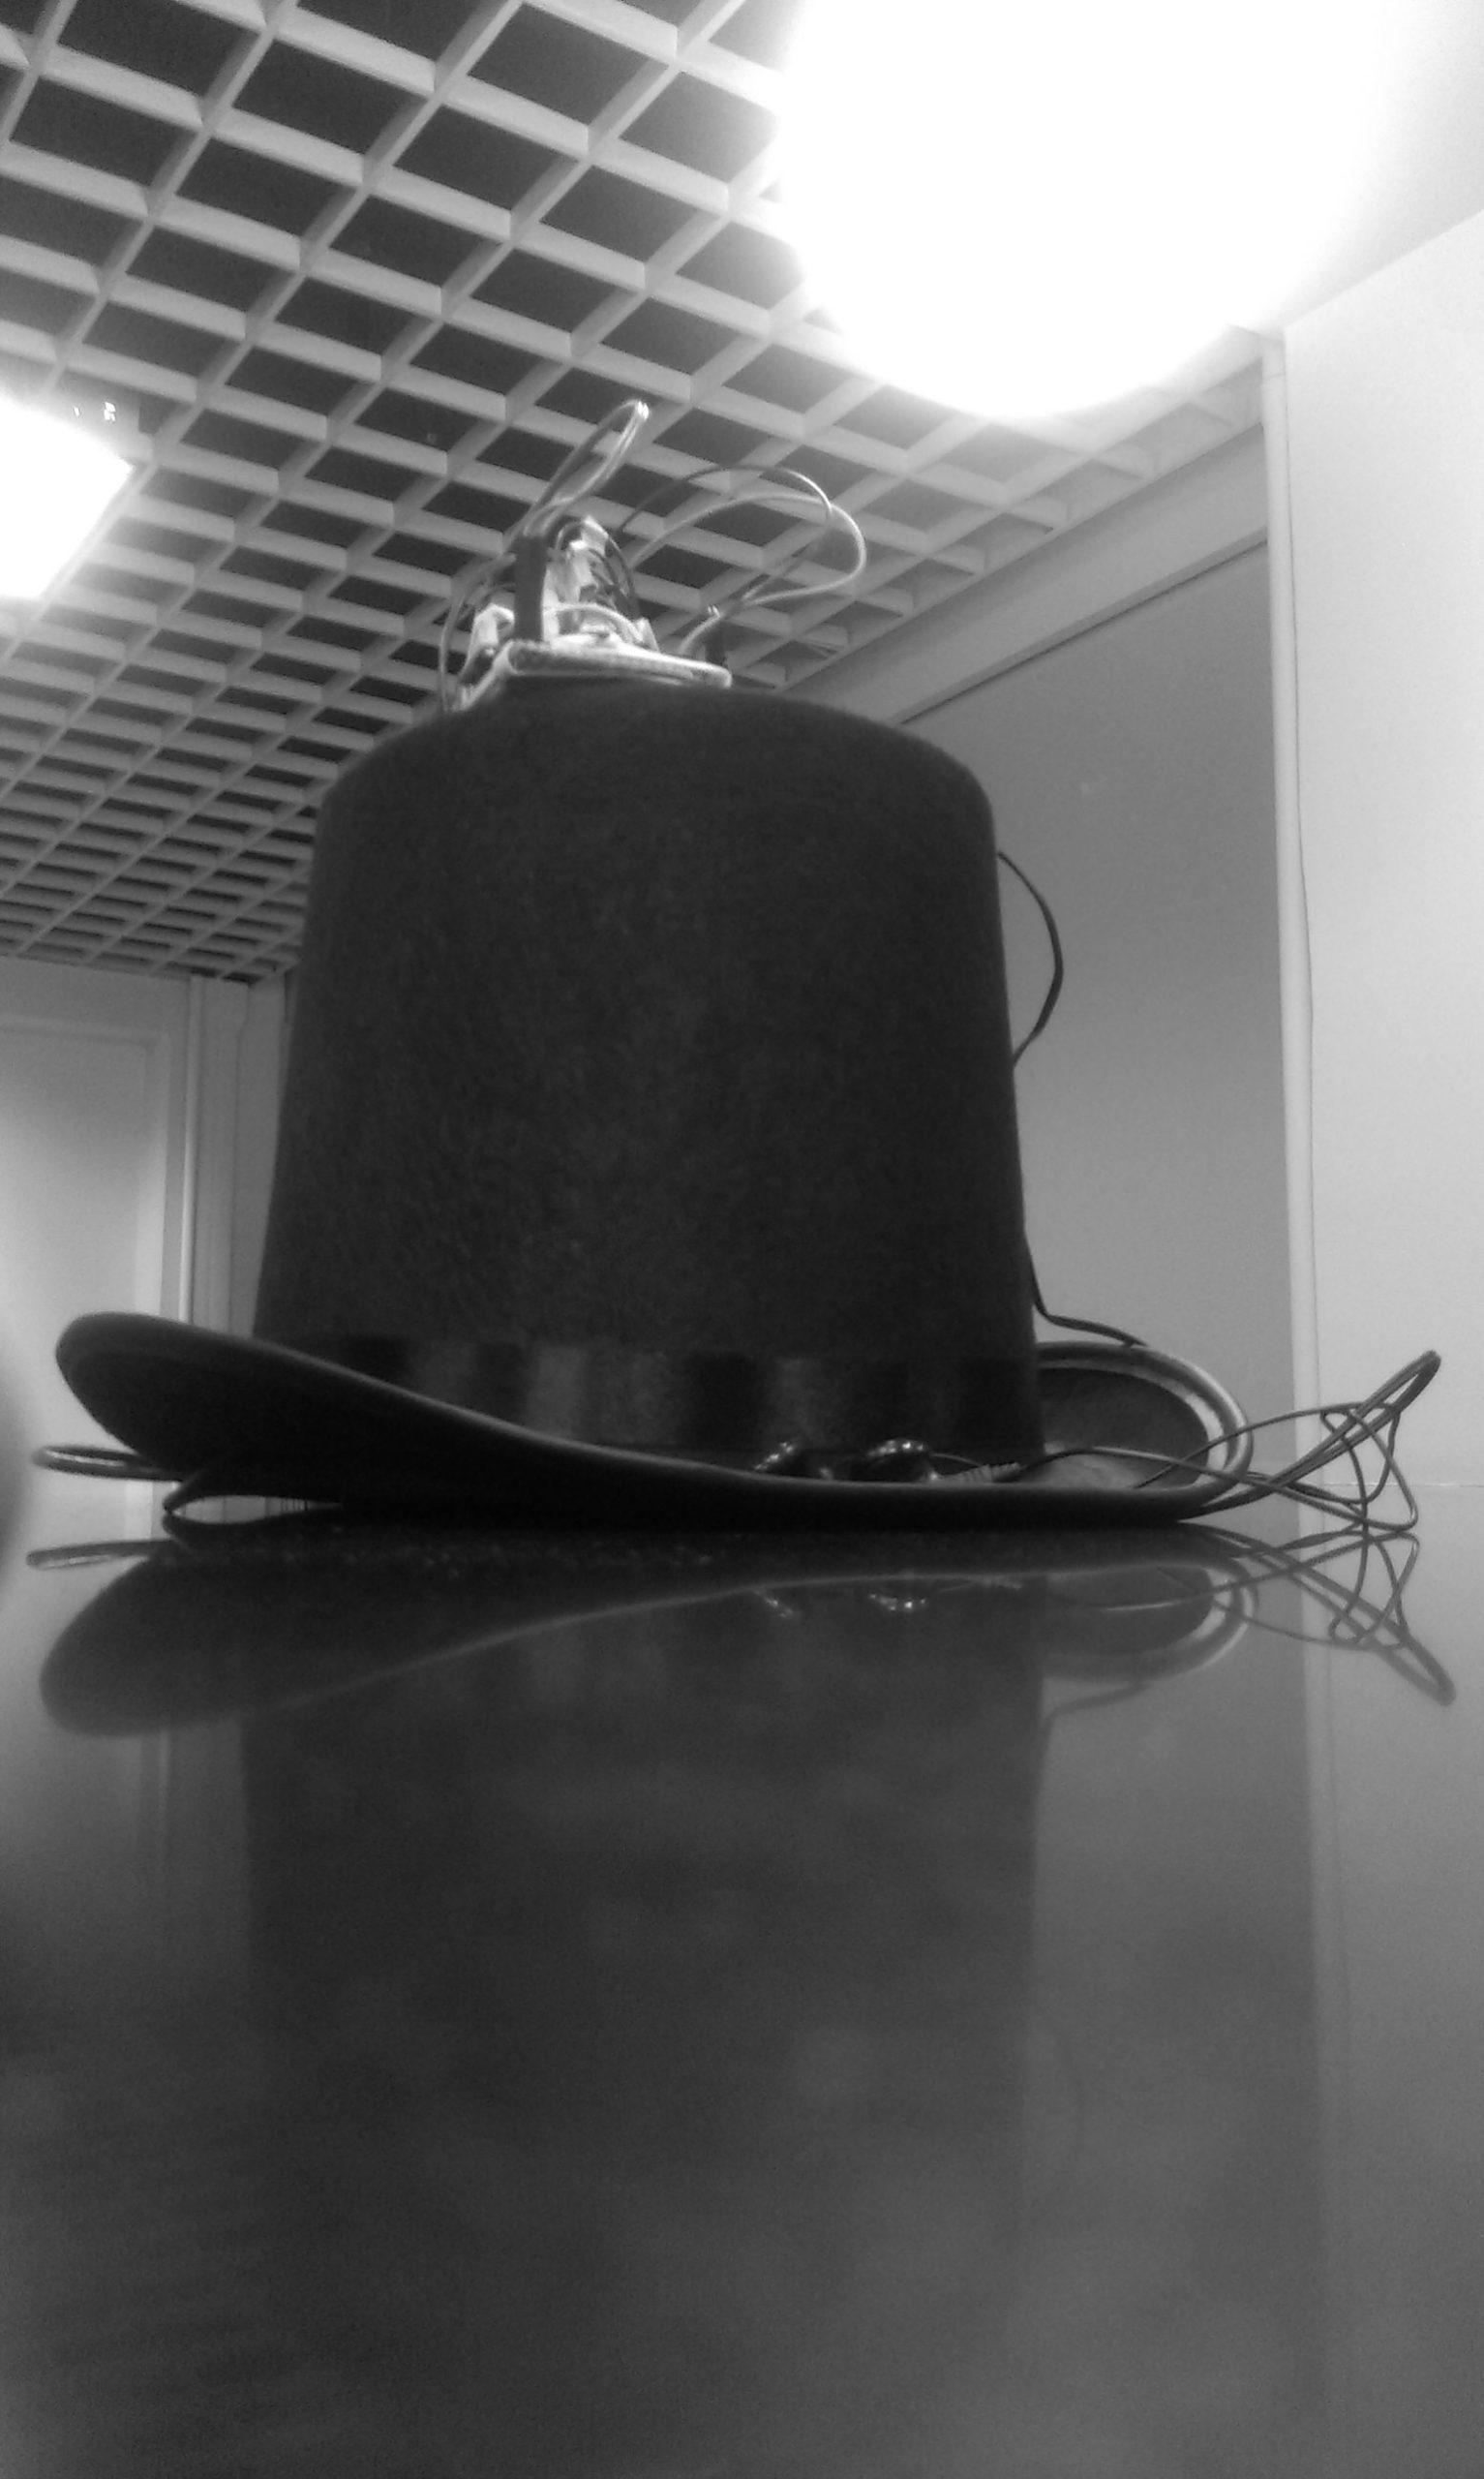 Sound Navigation - Top hat: Image copyright Cornell University